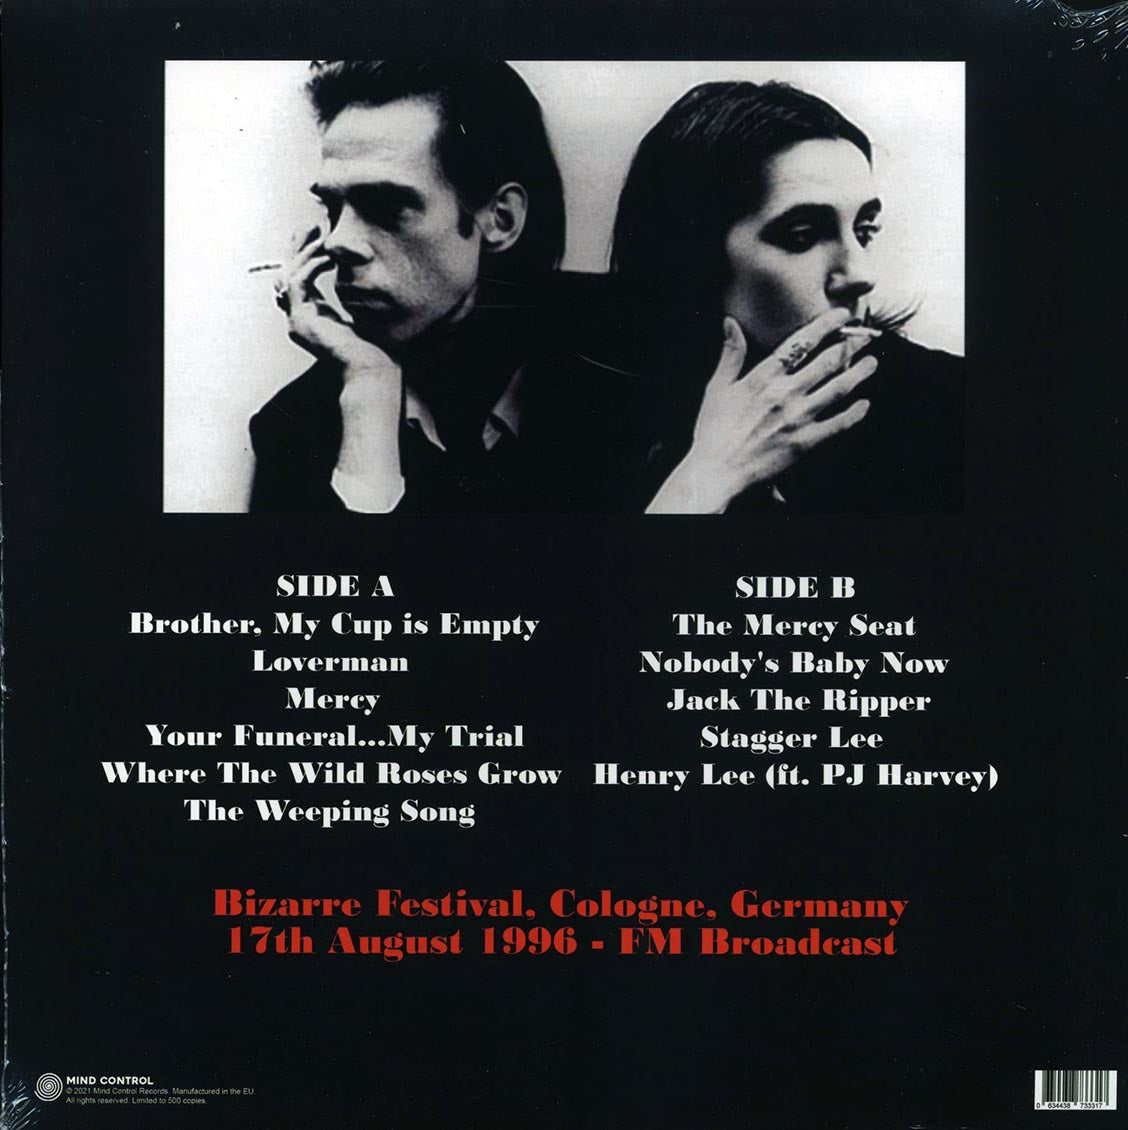 Nick Cave & The Bad Seeds - Bizarre Festival, Cologne, Germany, 17th August 1996: FM Broadcast (ltd. 500 copies made) - Vinyl LP, LP